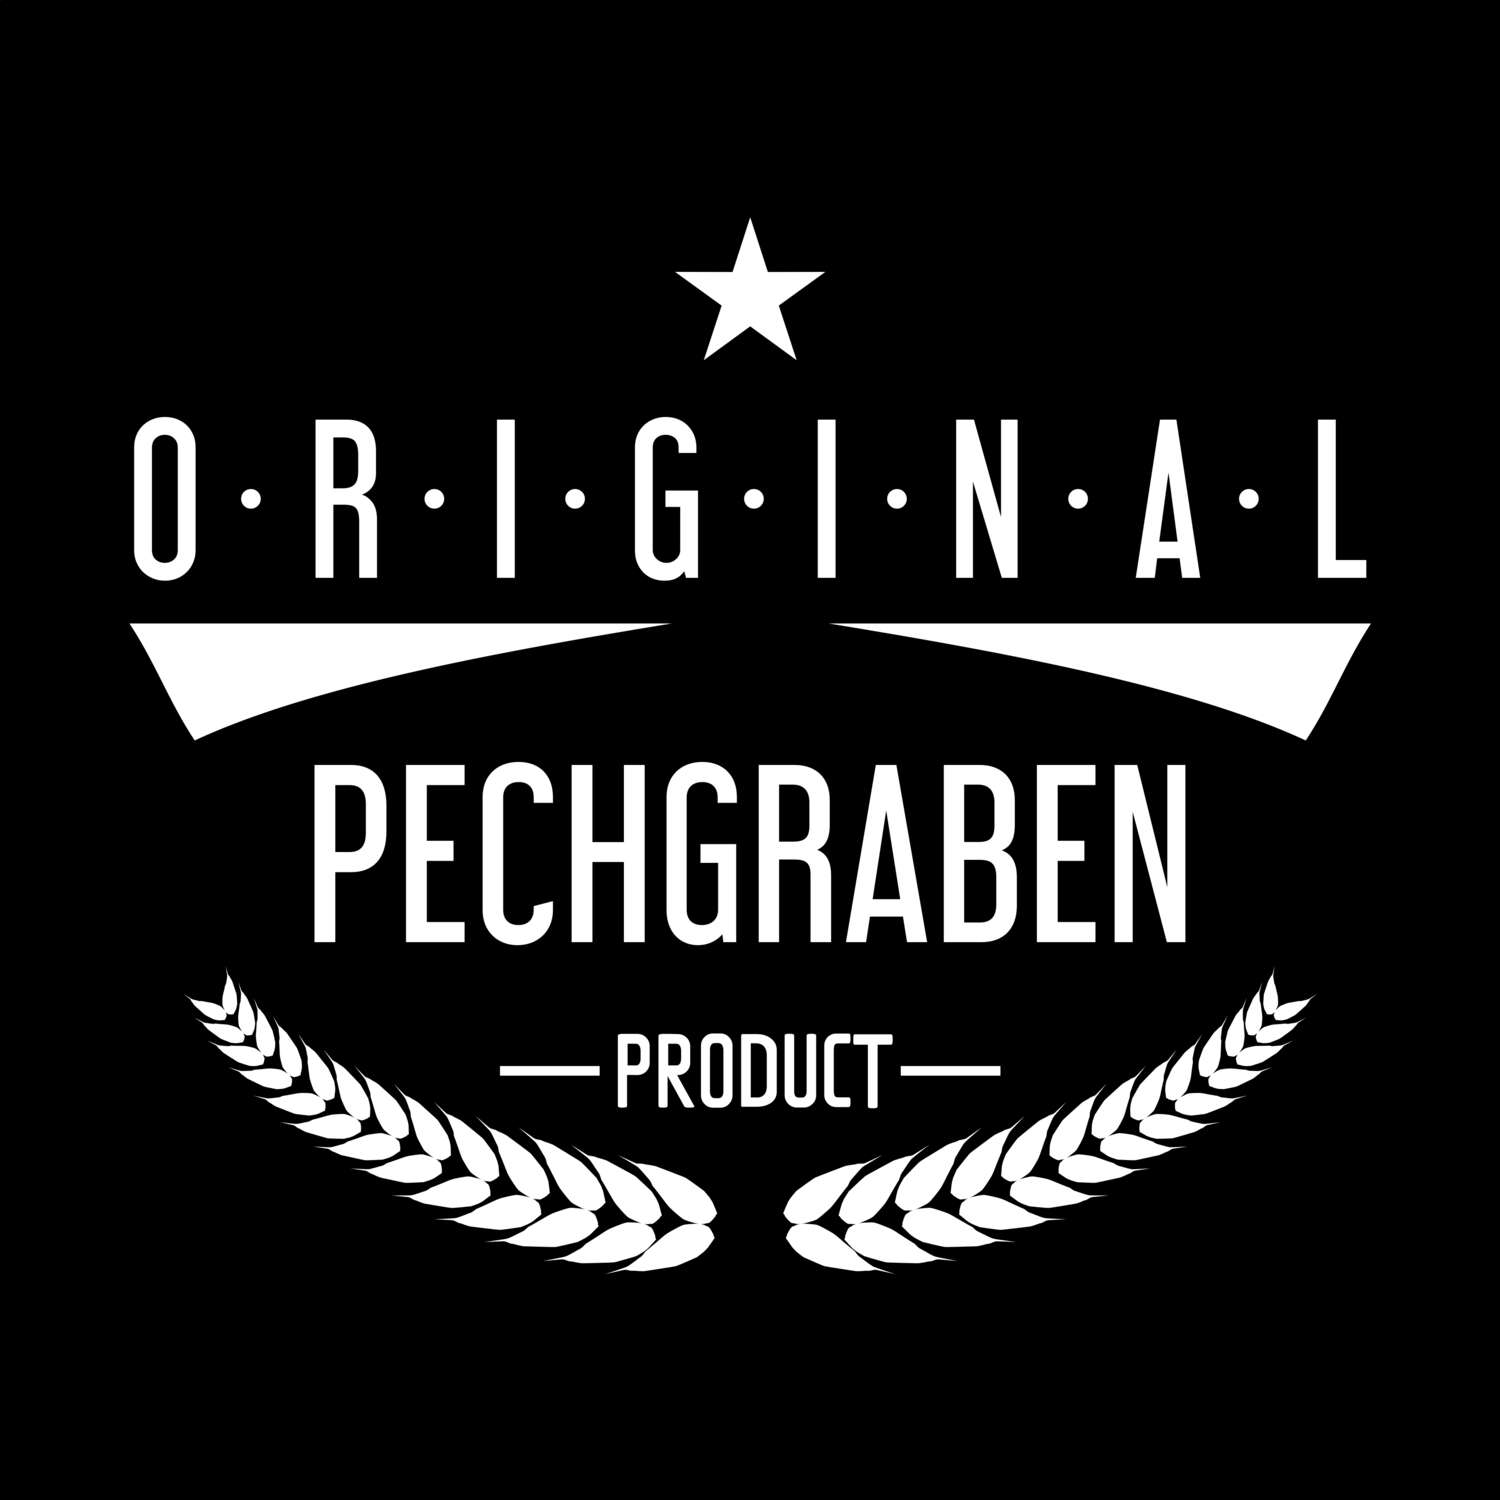 Pechgraben T-Shirt »Original Product«